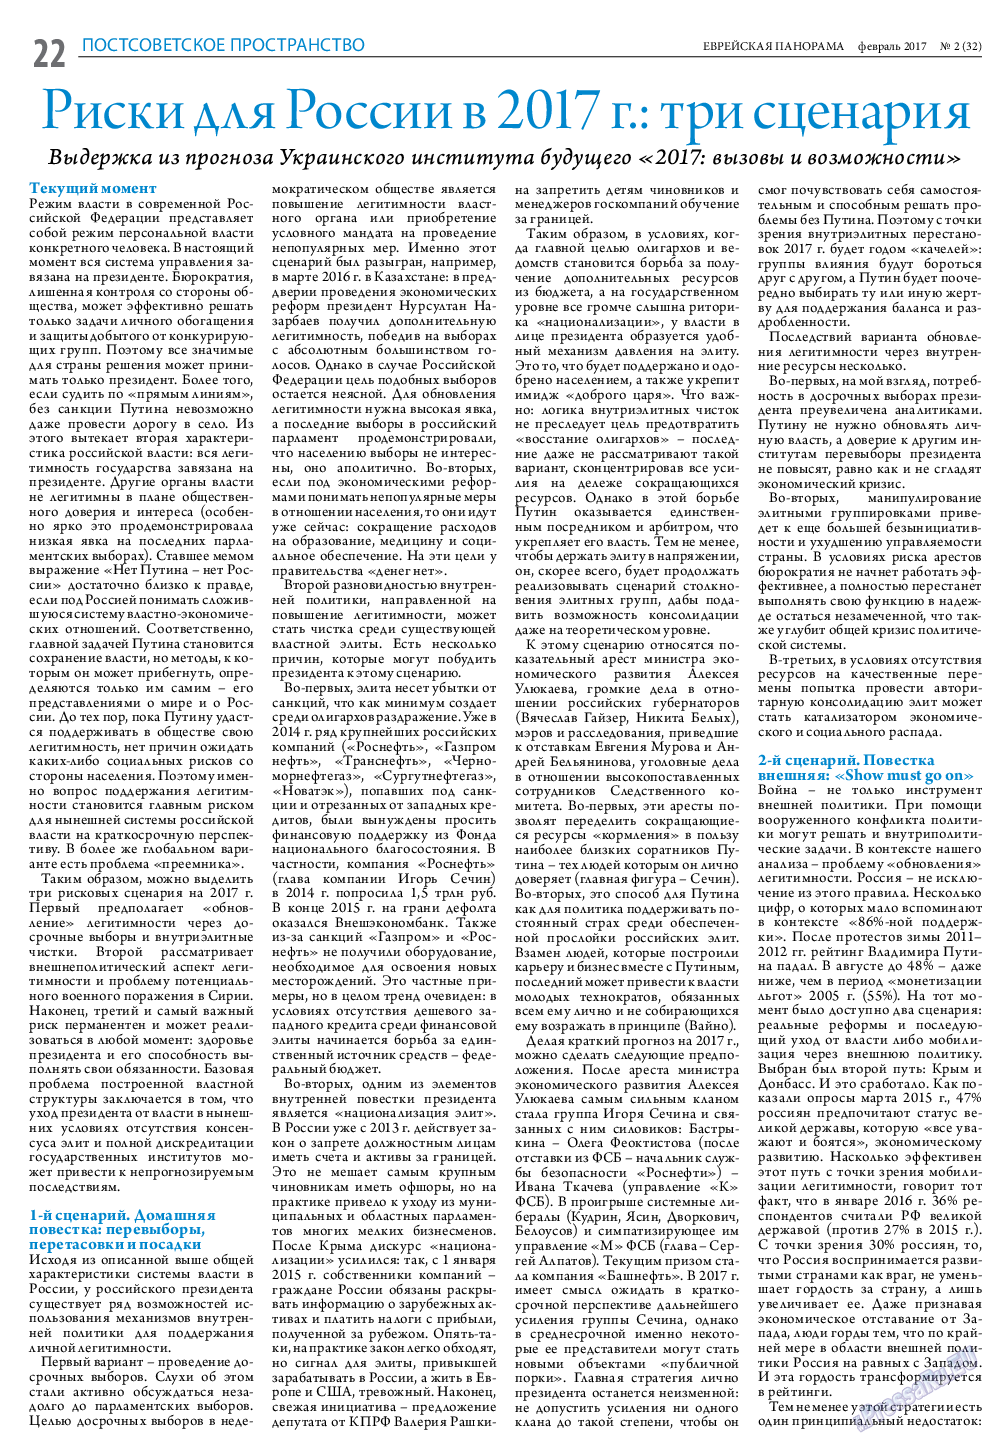 Еврейская панорама, газета. 2017 №2 стр.22